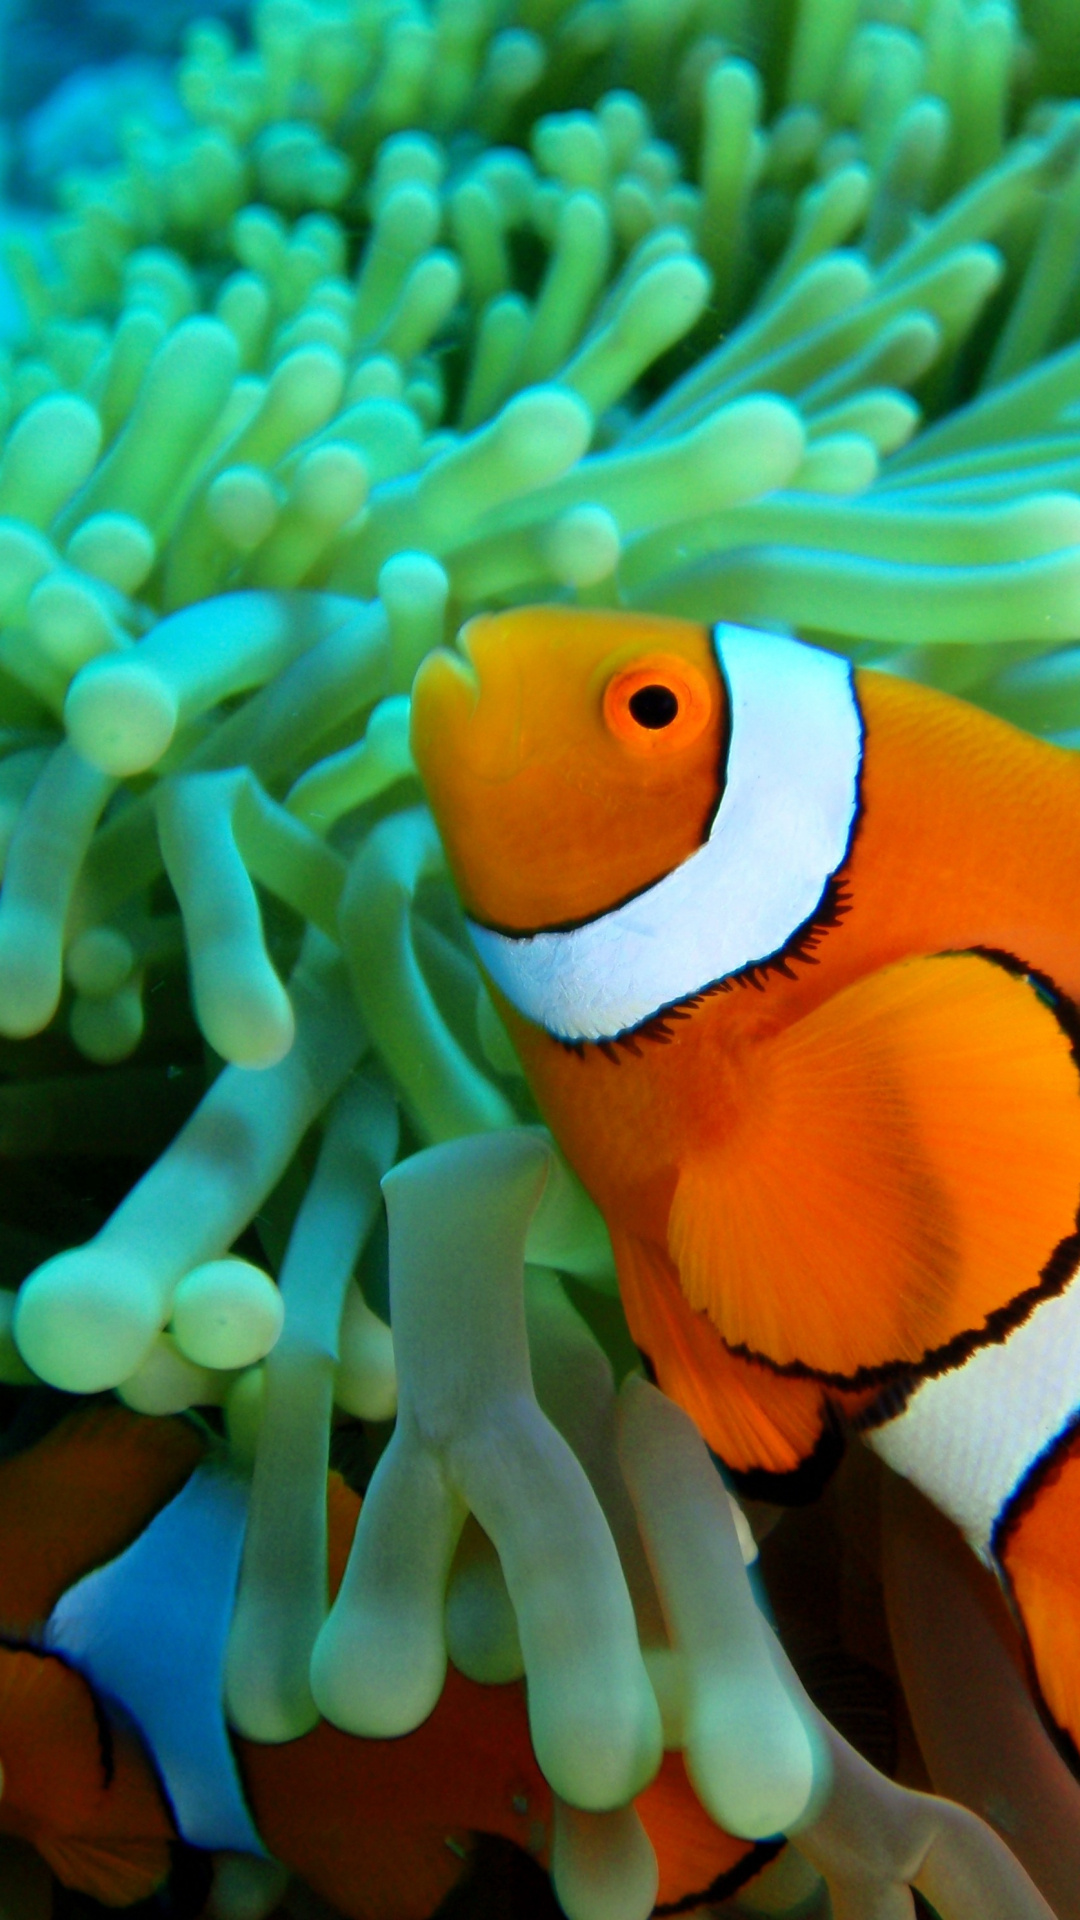 Clown Fish: Inhabit coral reefs, Live among the venomous tentacles of large sea anemones. 1080x1920 Full HD Wallpaper.